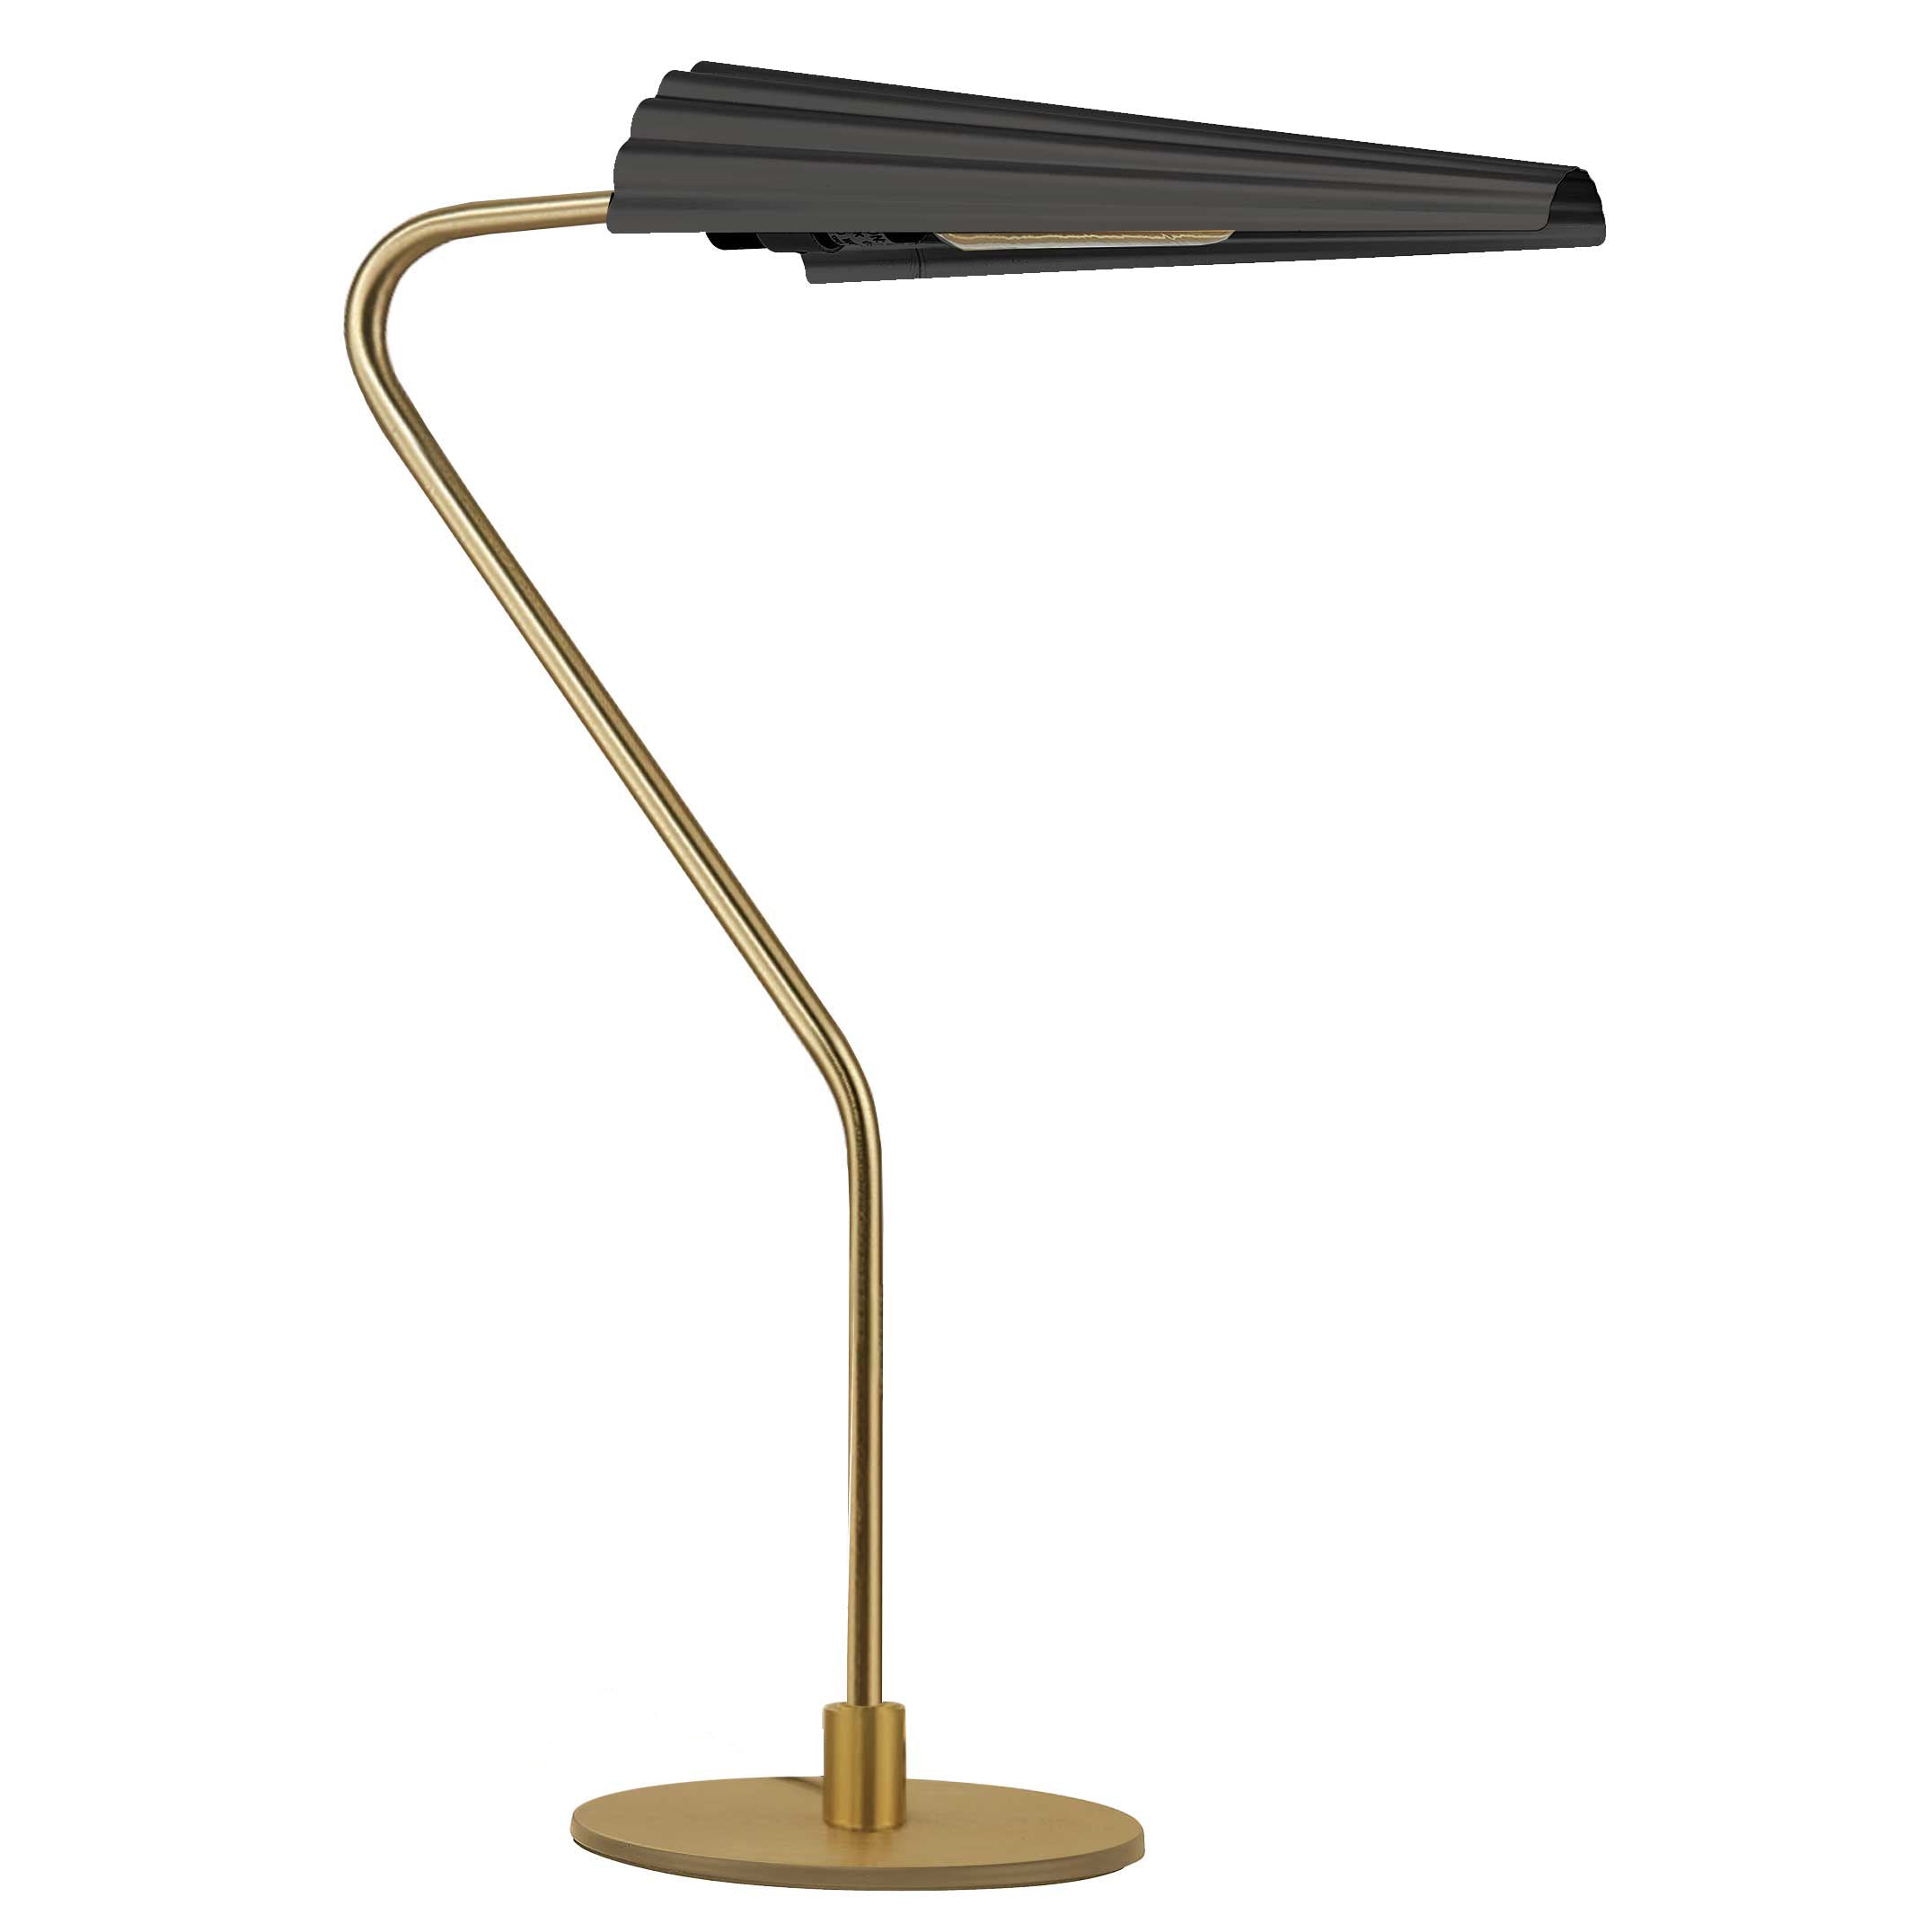 CASSIE Table lamp Gold, Black - CSE-211T-AGB-MB | DAINOLITE